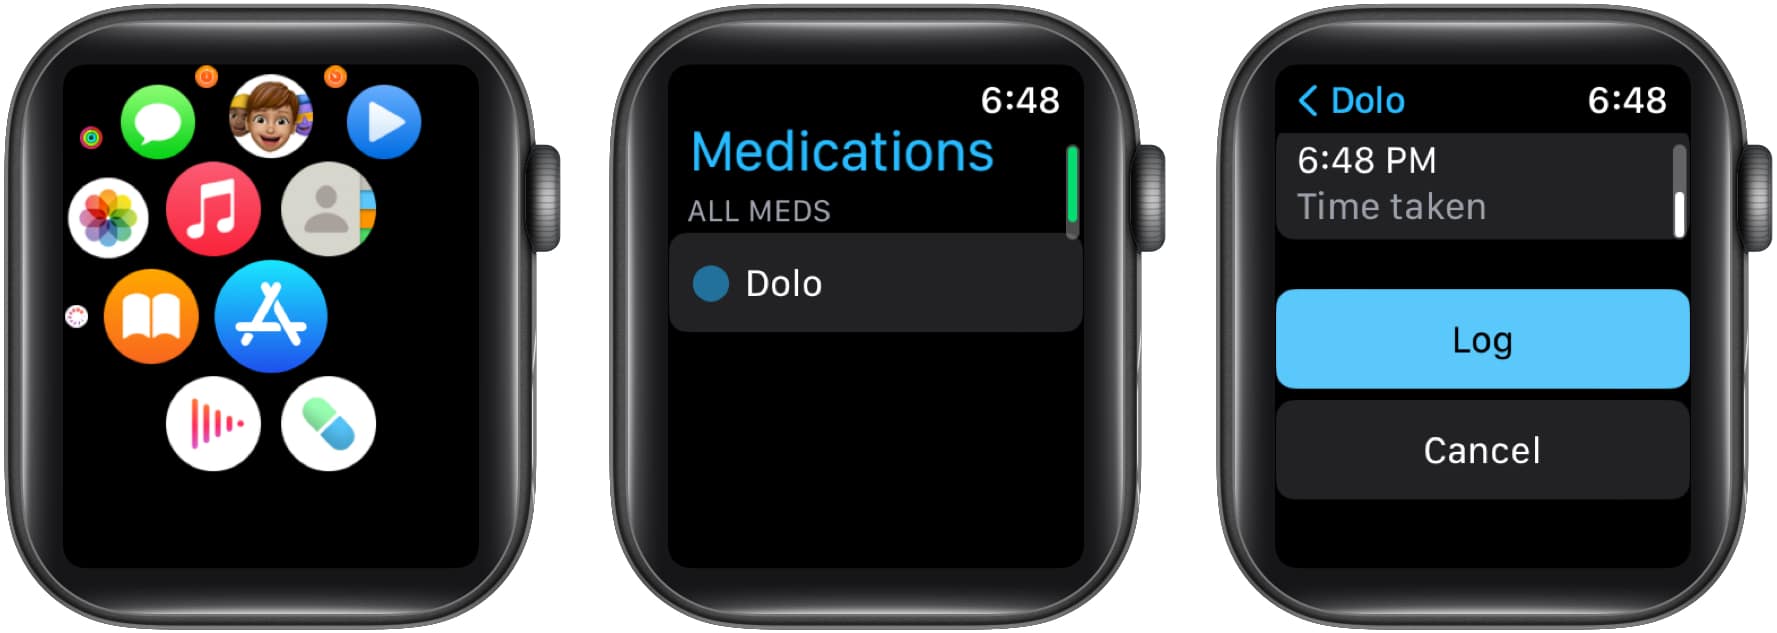 Log medications into Apple Watch